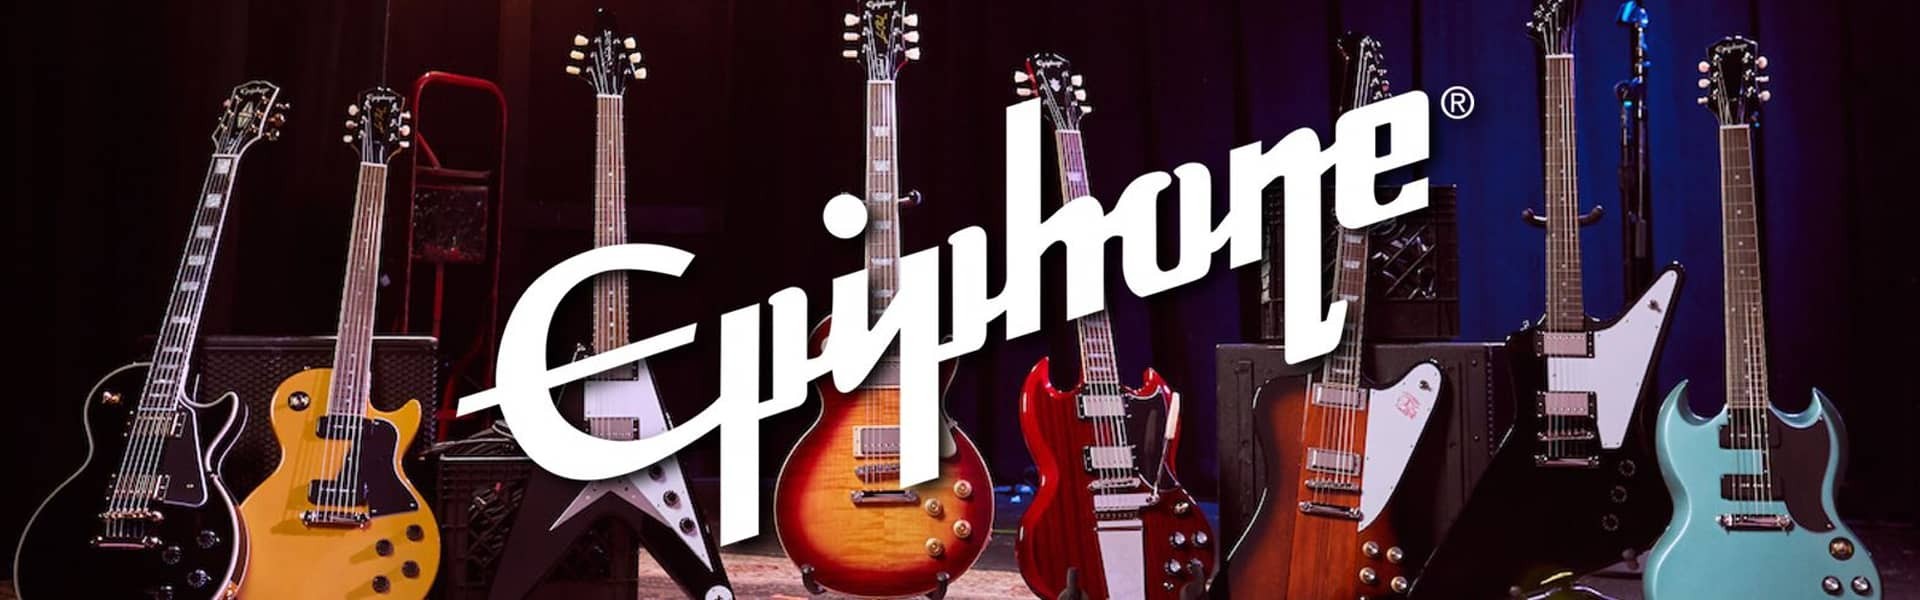 Gitary znanje i cenionej marki Epiphone